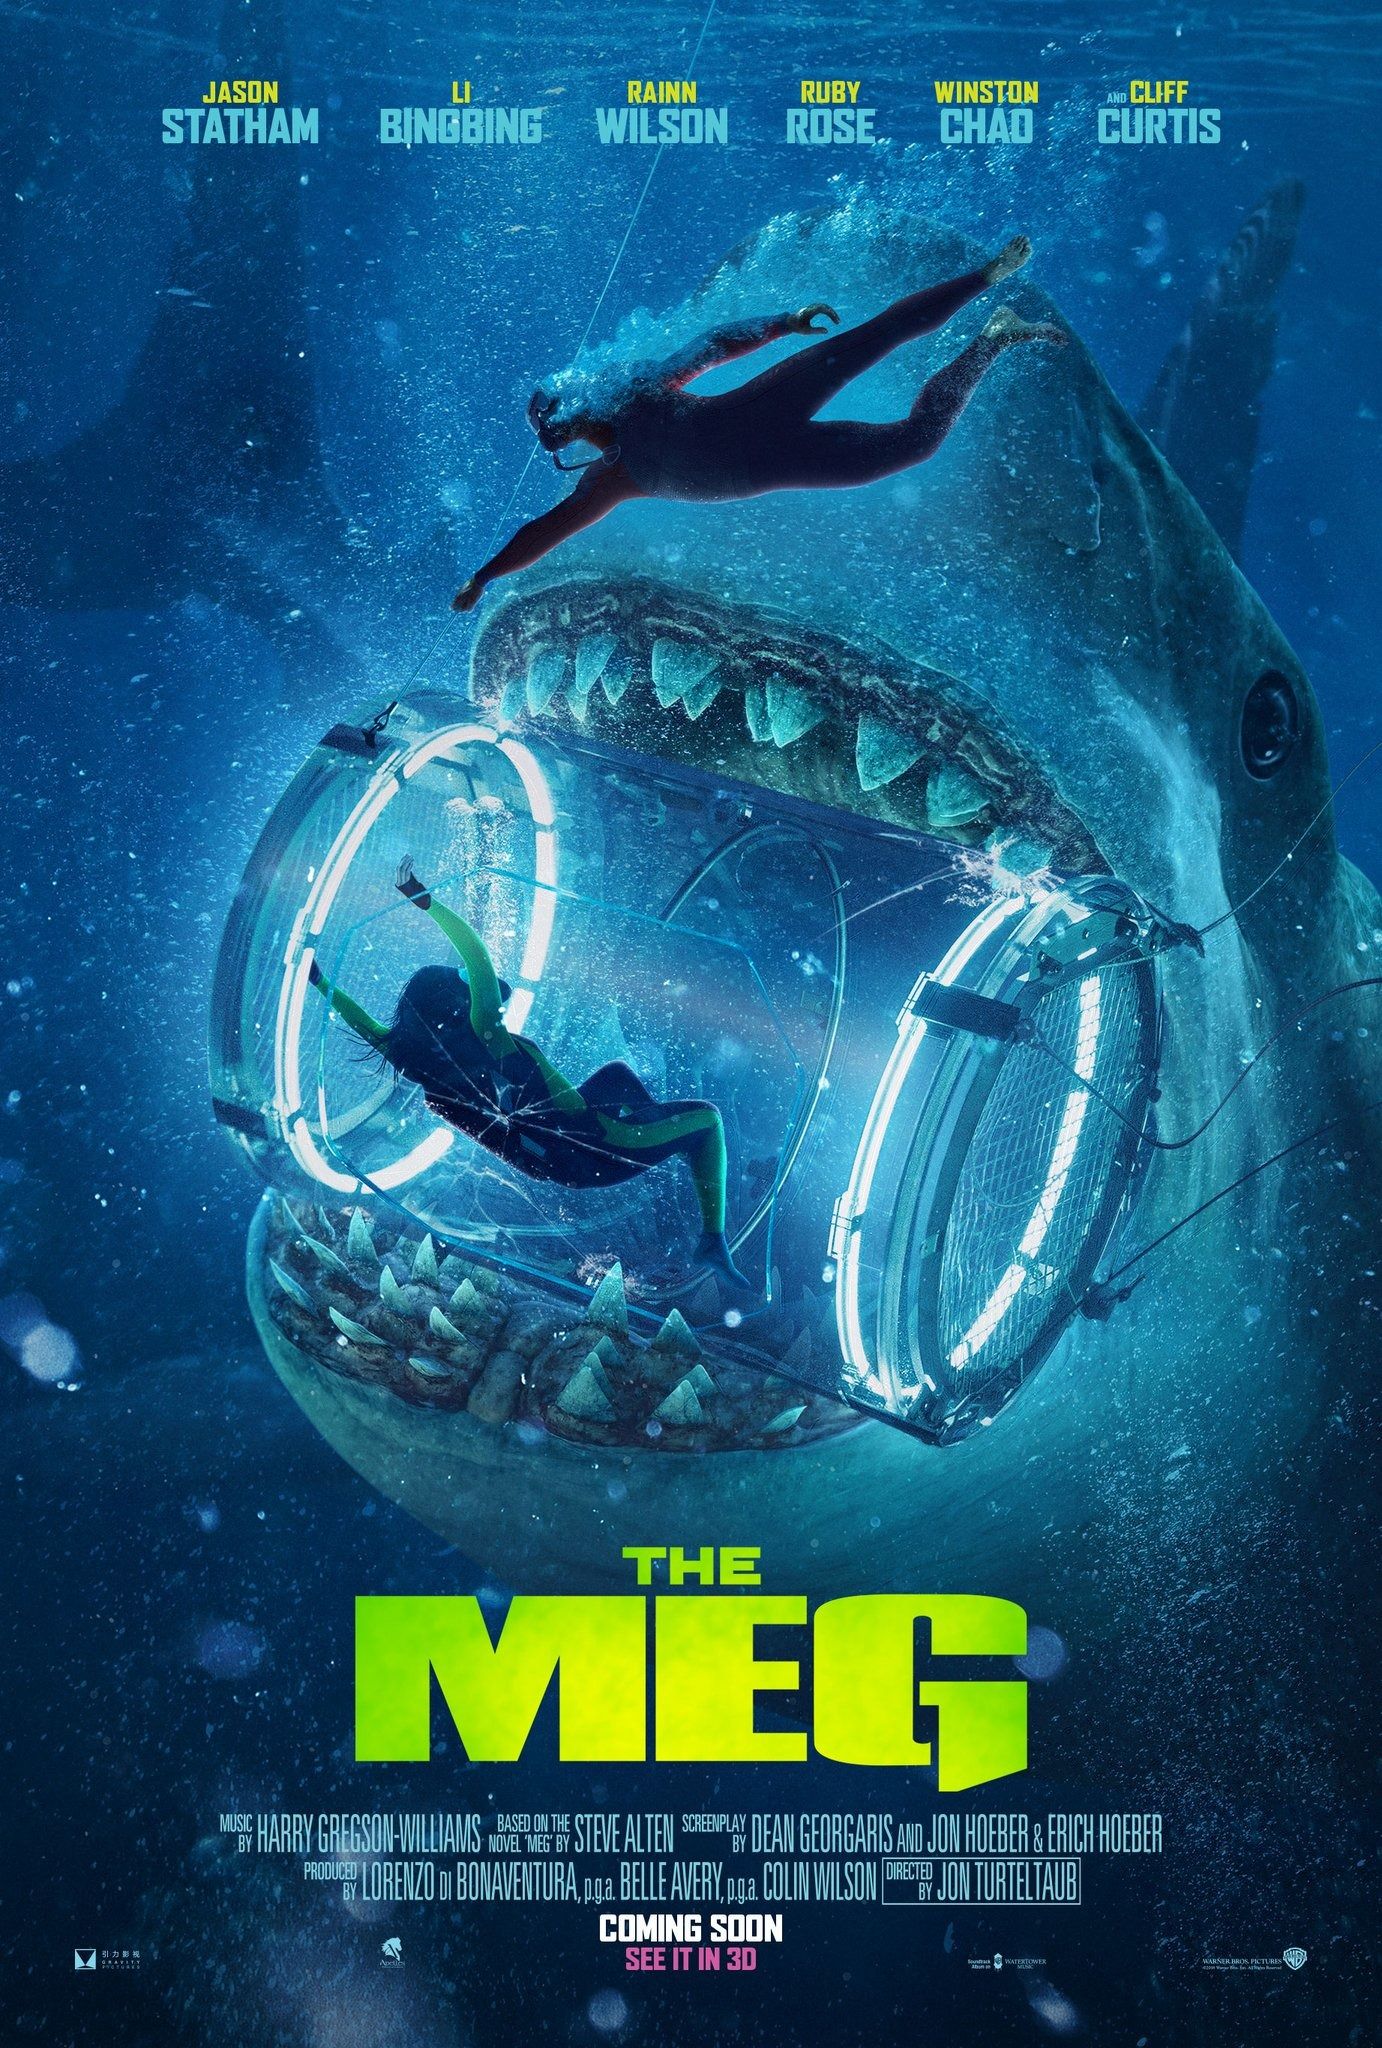 The Meg movie poster